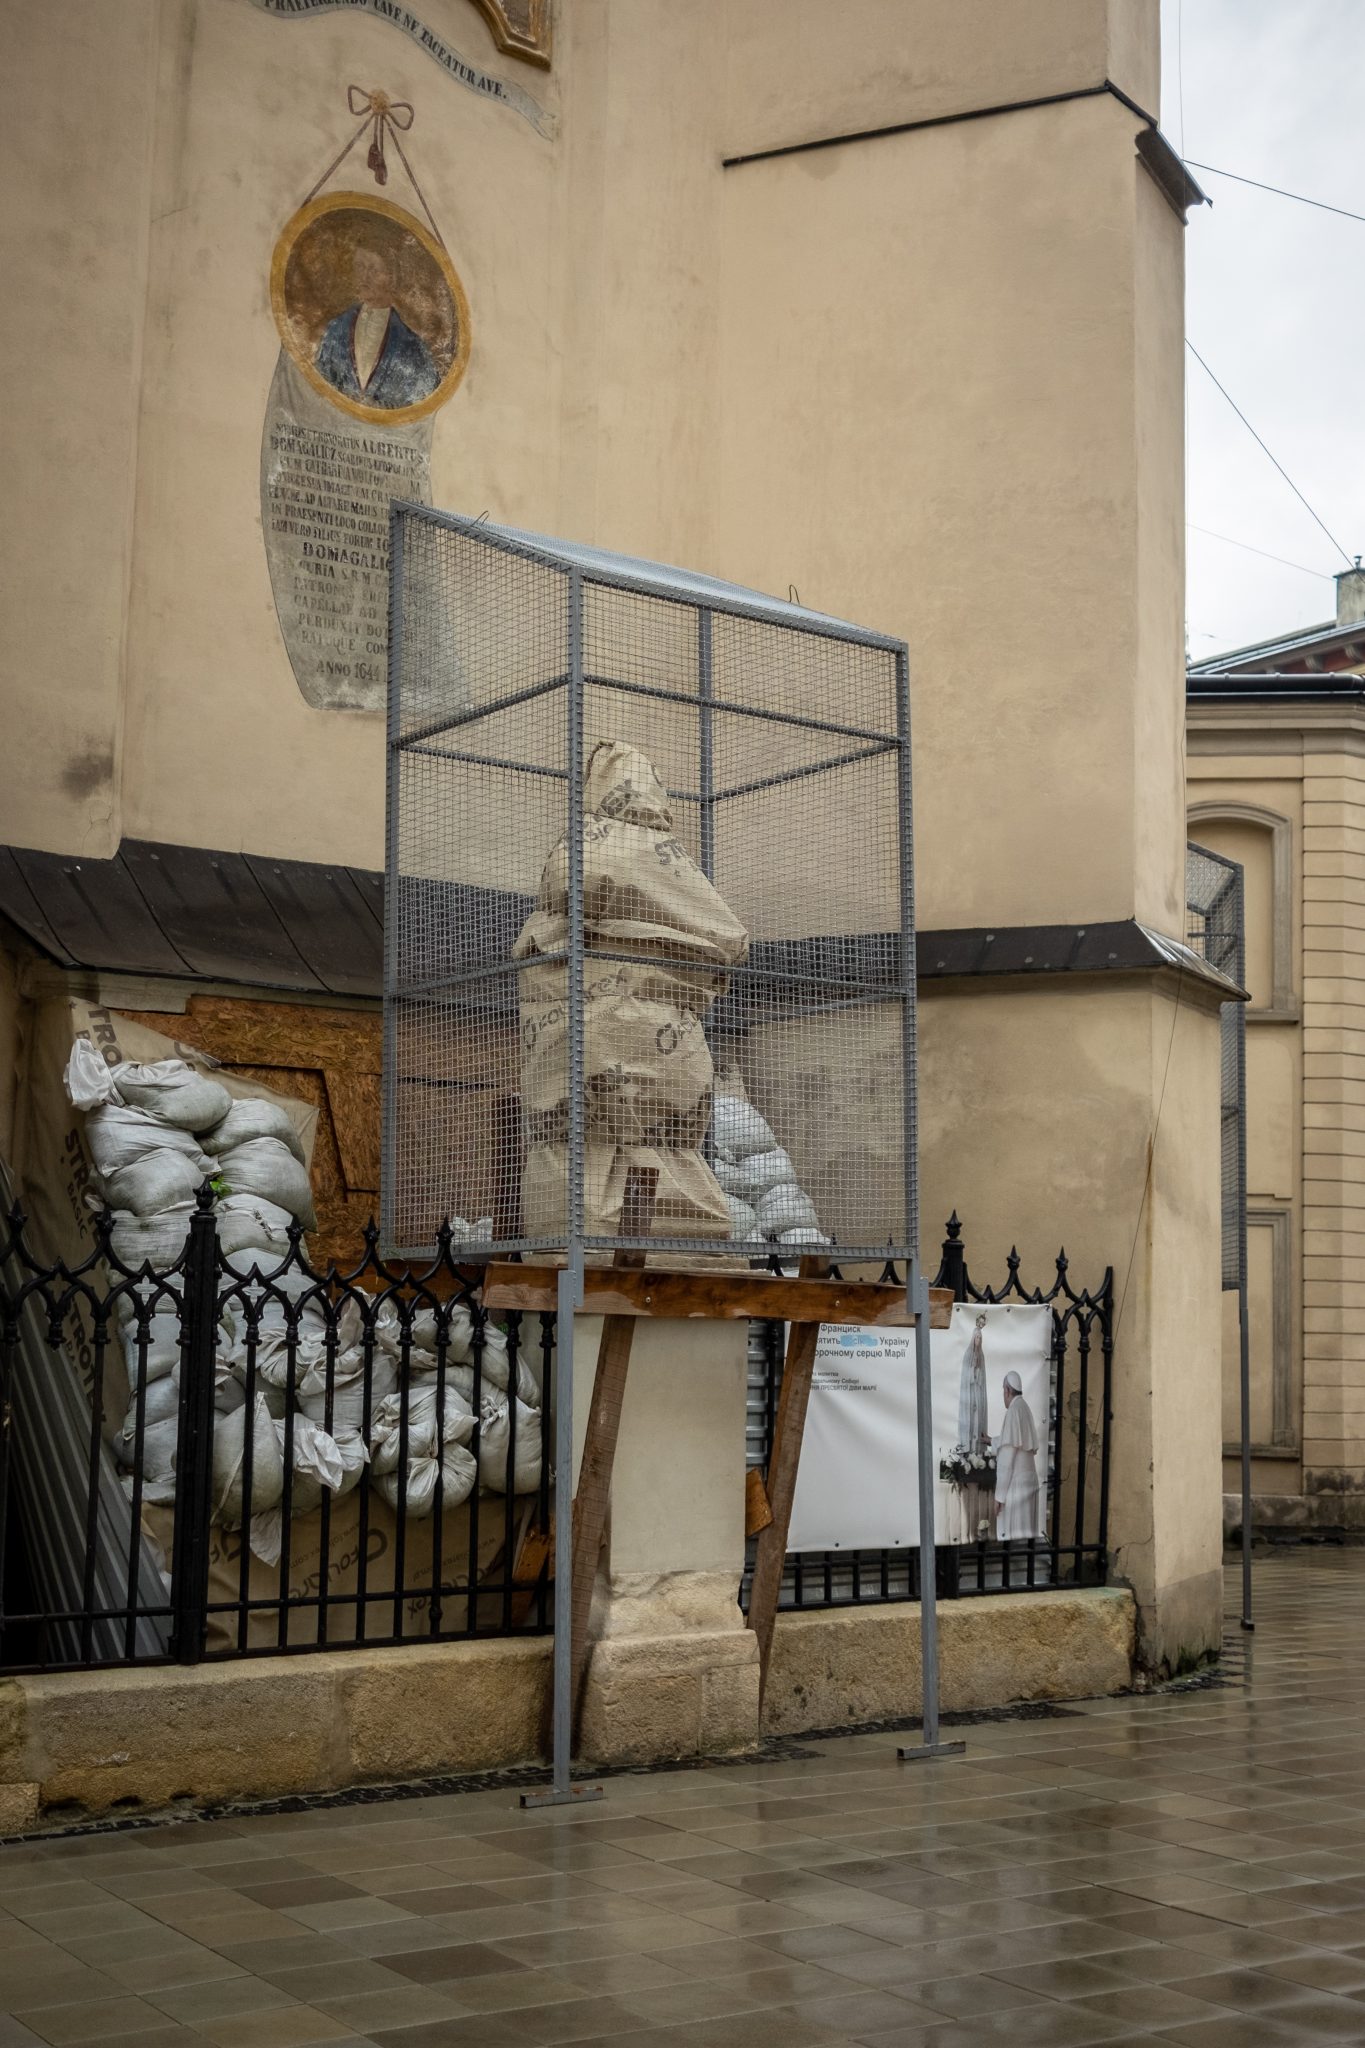 Protective cage around a church statue in wartime Lviv, Ukraine